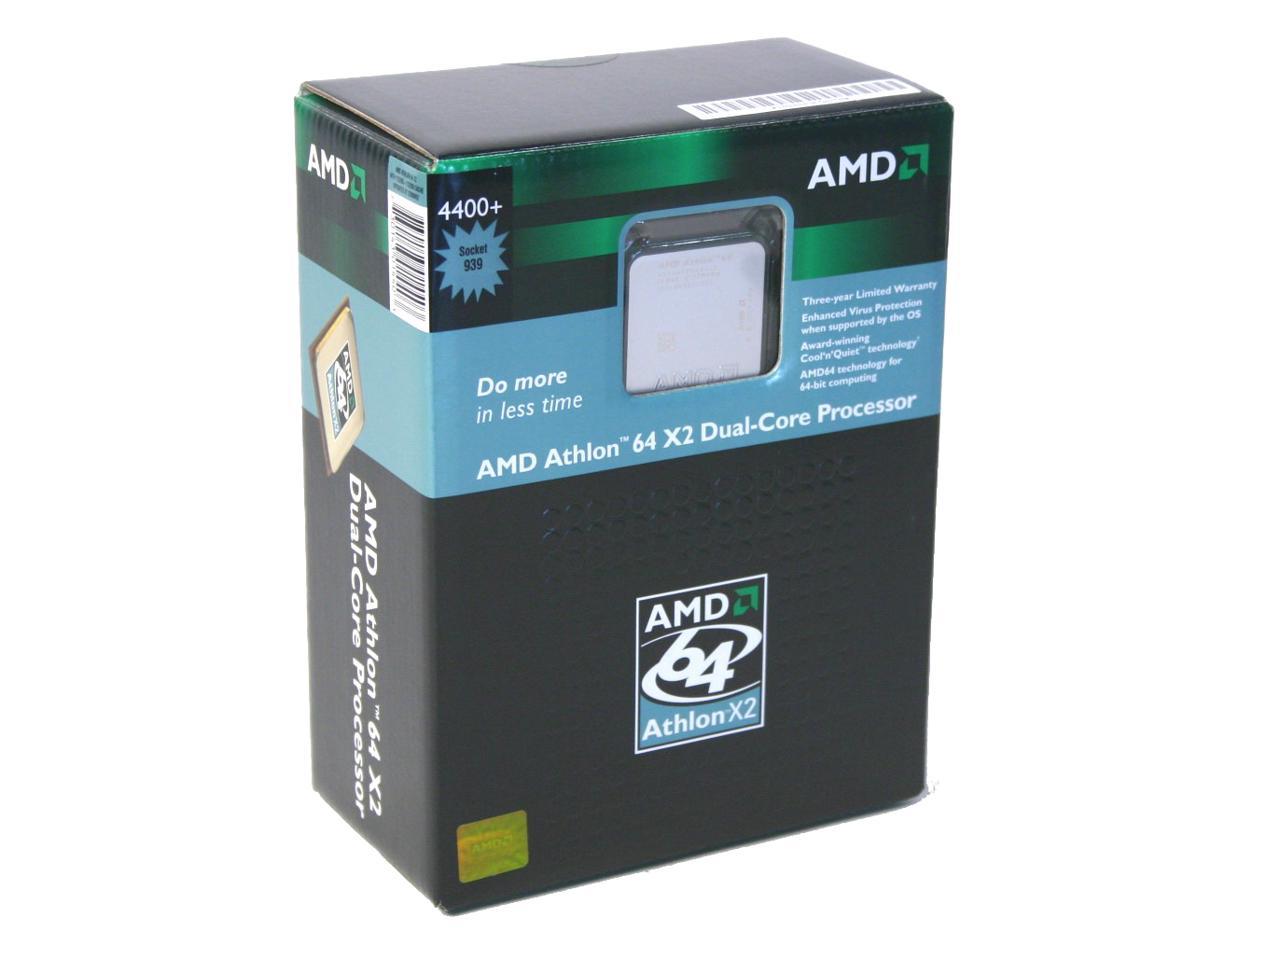 Amd 64 4400. AMD Athlon 64x2 4800+ 939 Box. AMD FX 60 s939 Box. AMD Athlon 64 FX-57. Процессор AMD 4400.